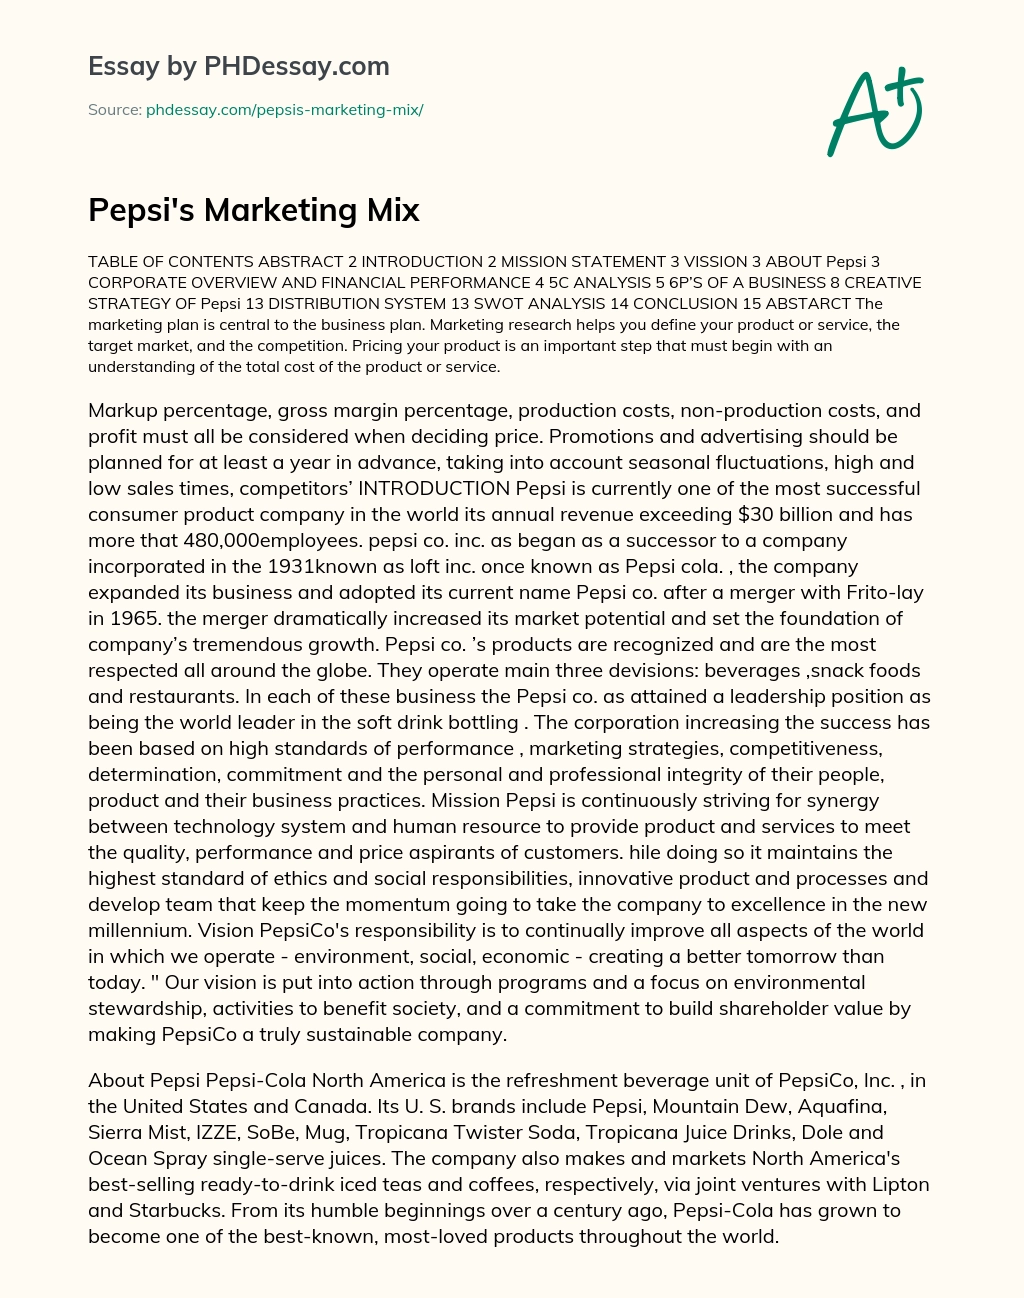 Pepsi’s Marketing Mix essay